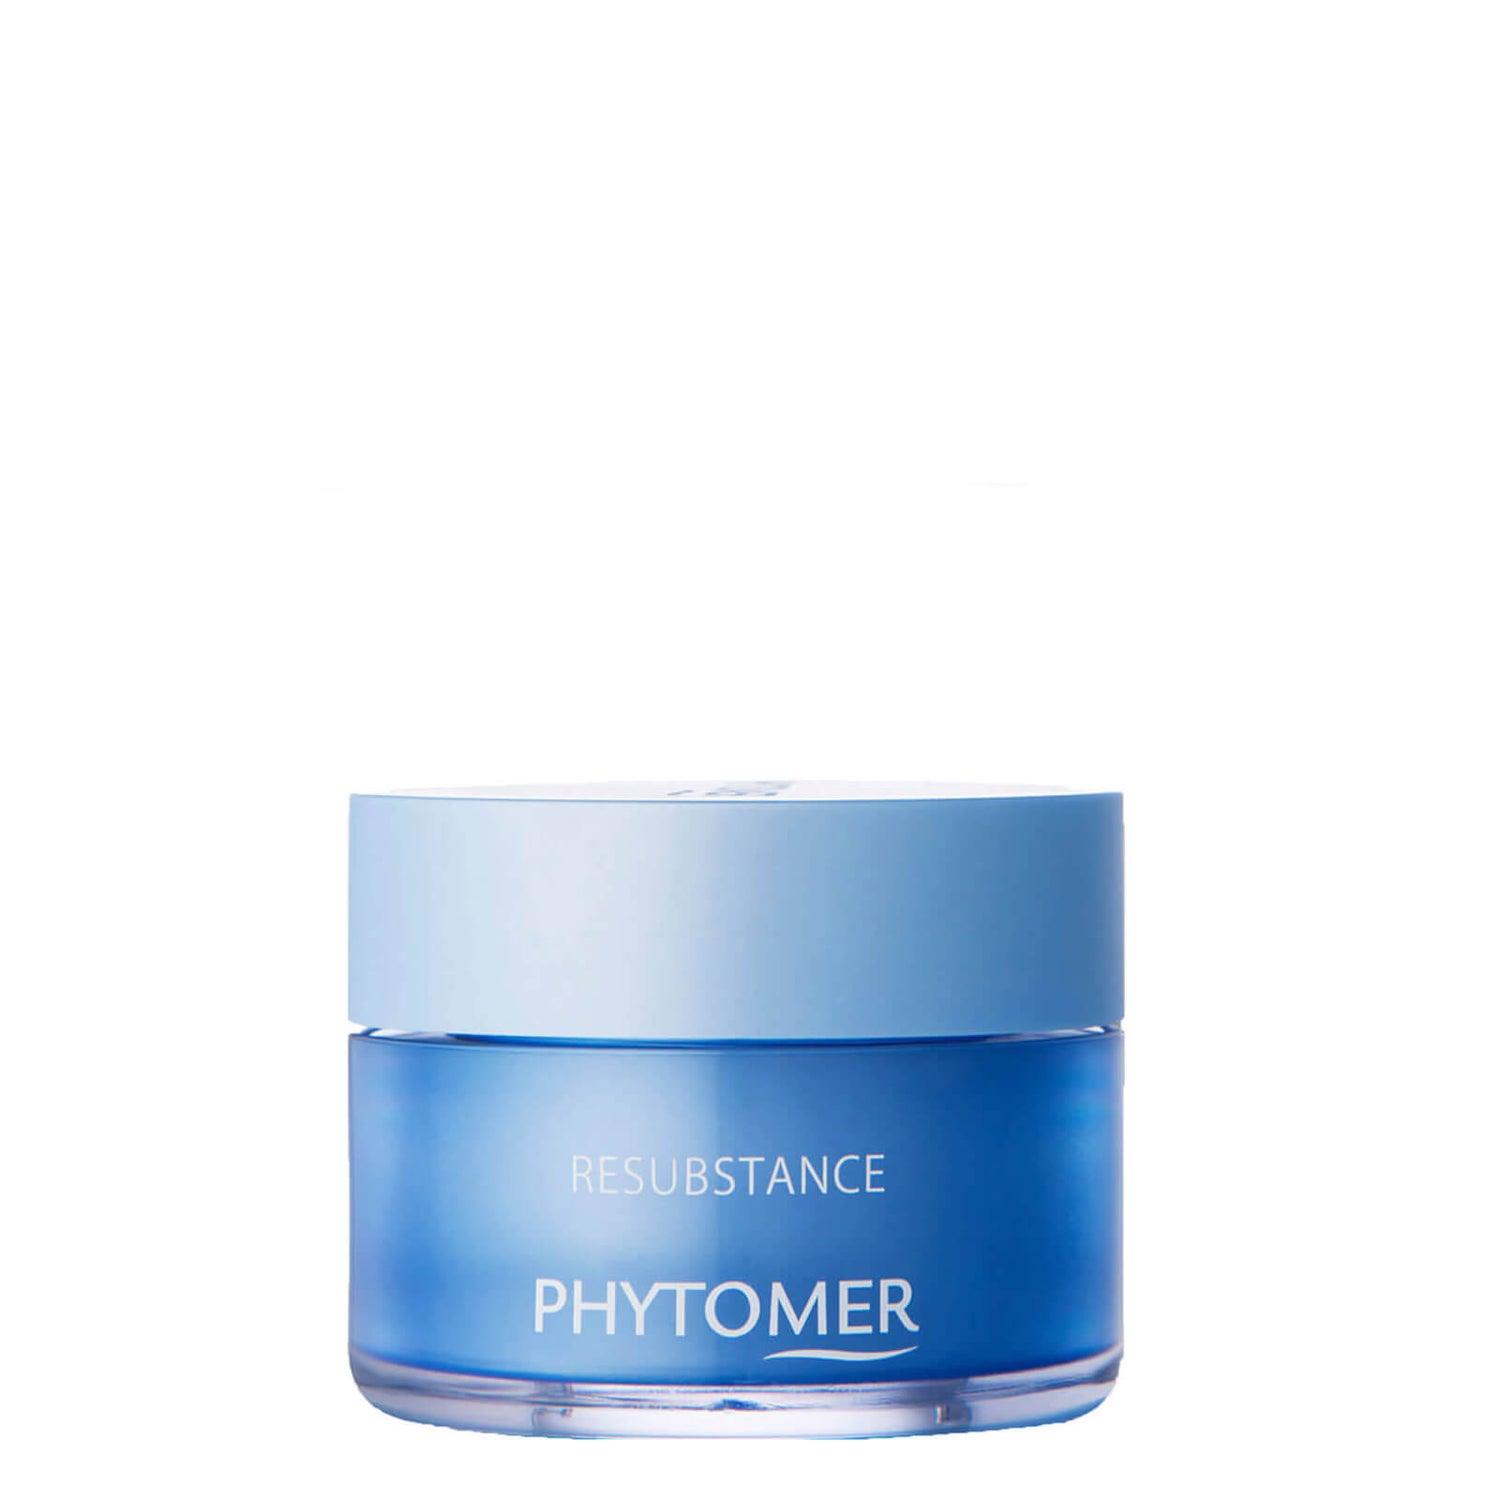 Phytomer RESUBSTANCE Skin Resilience Rich Cream (50 ml.)